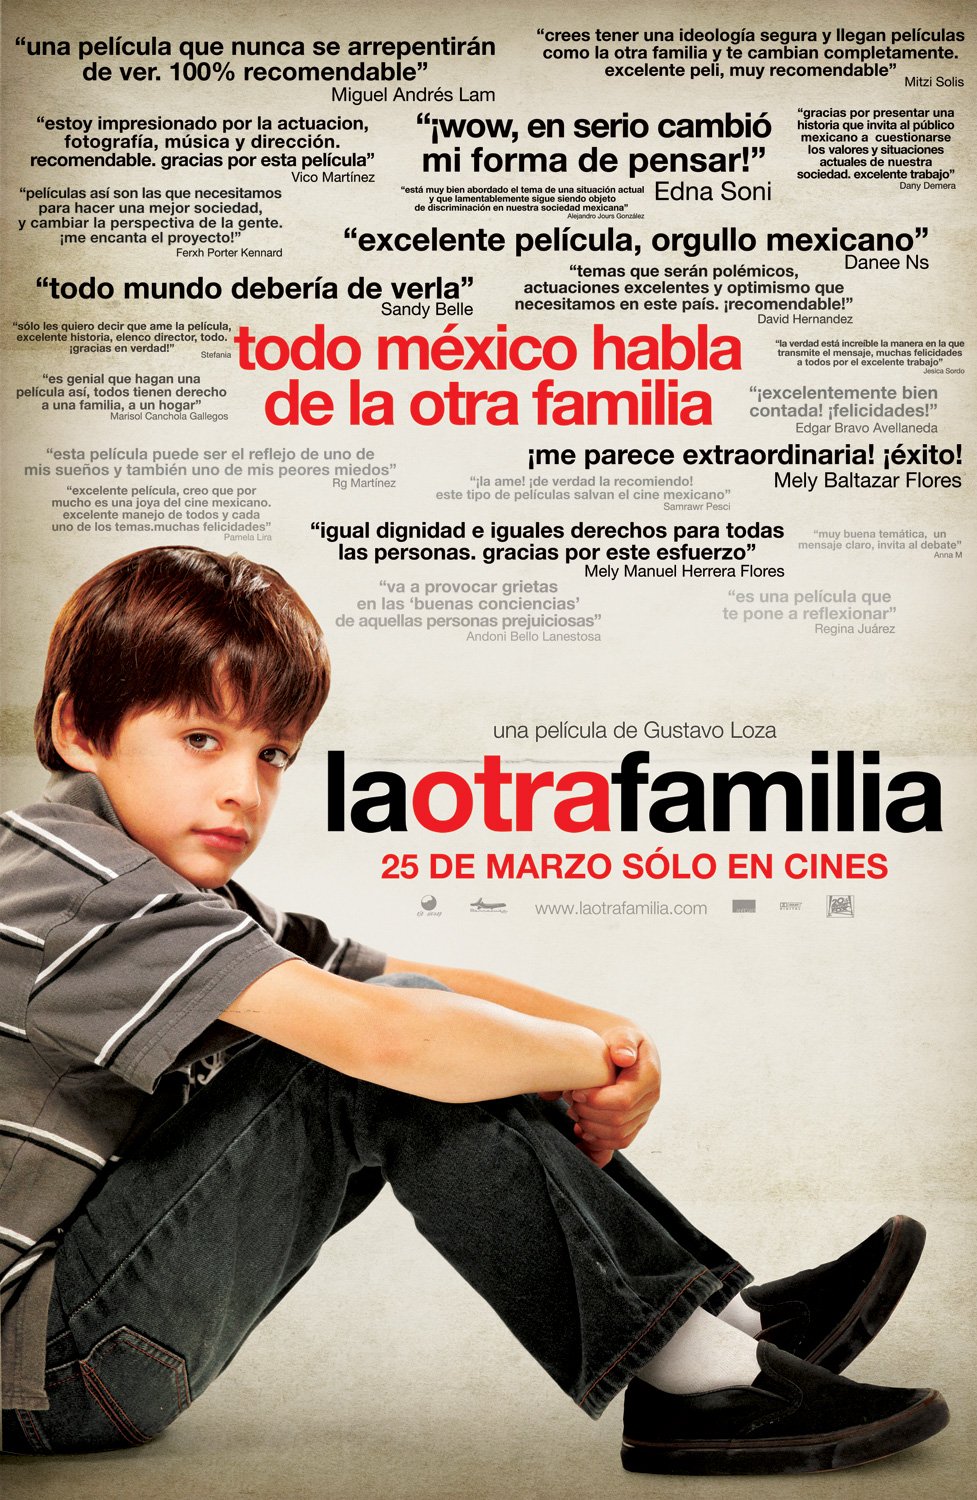 Extra Large Movie Poster Image for La otra familia (#2 of 5)